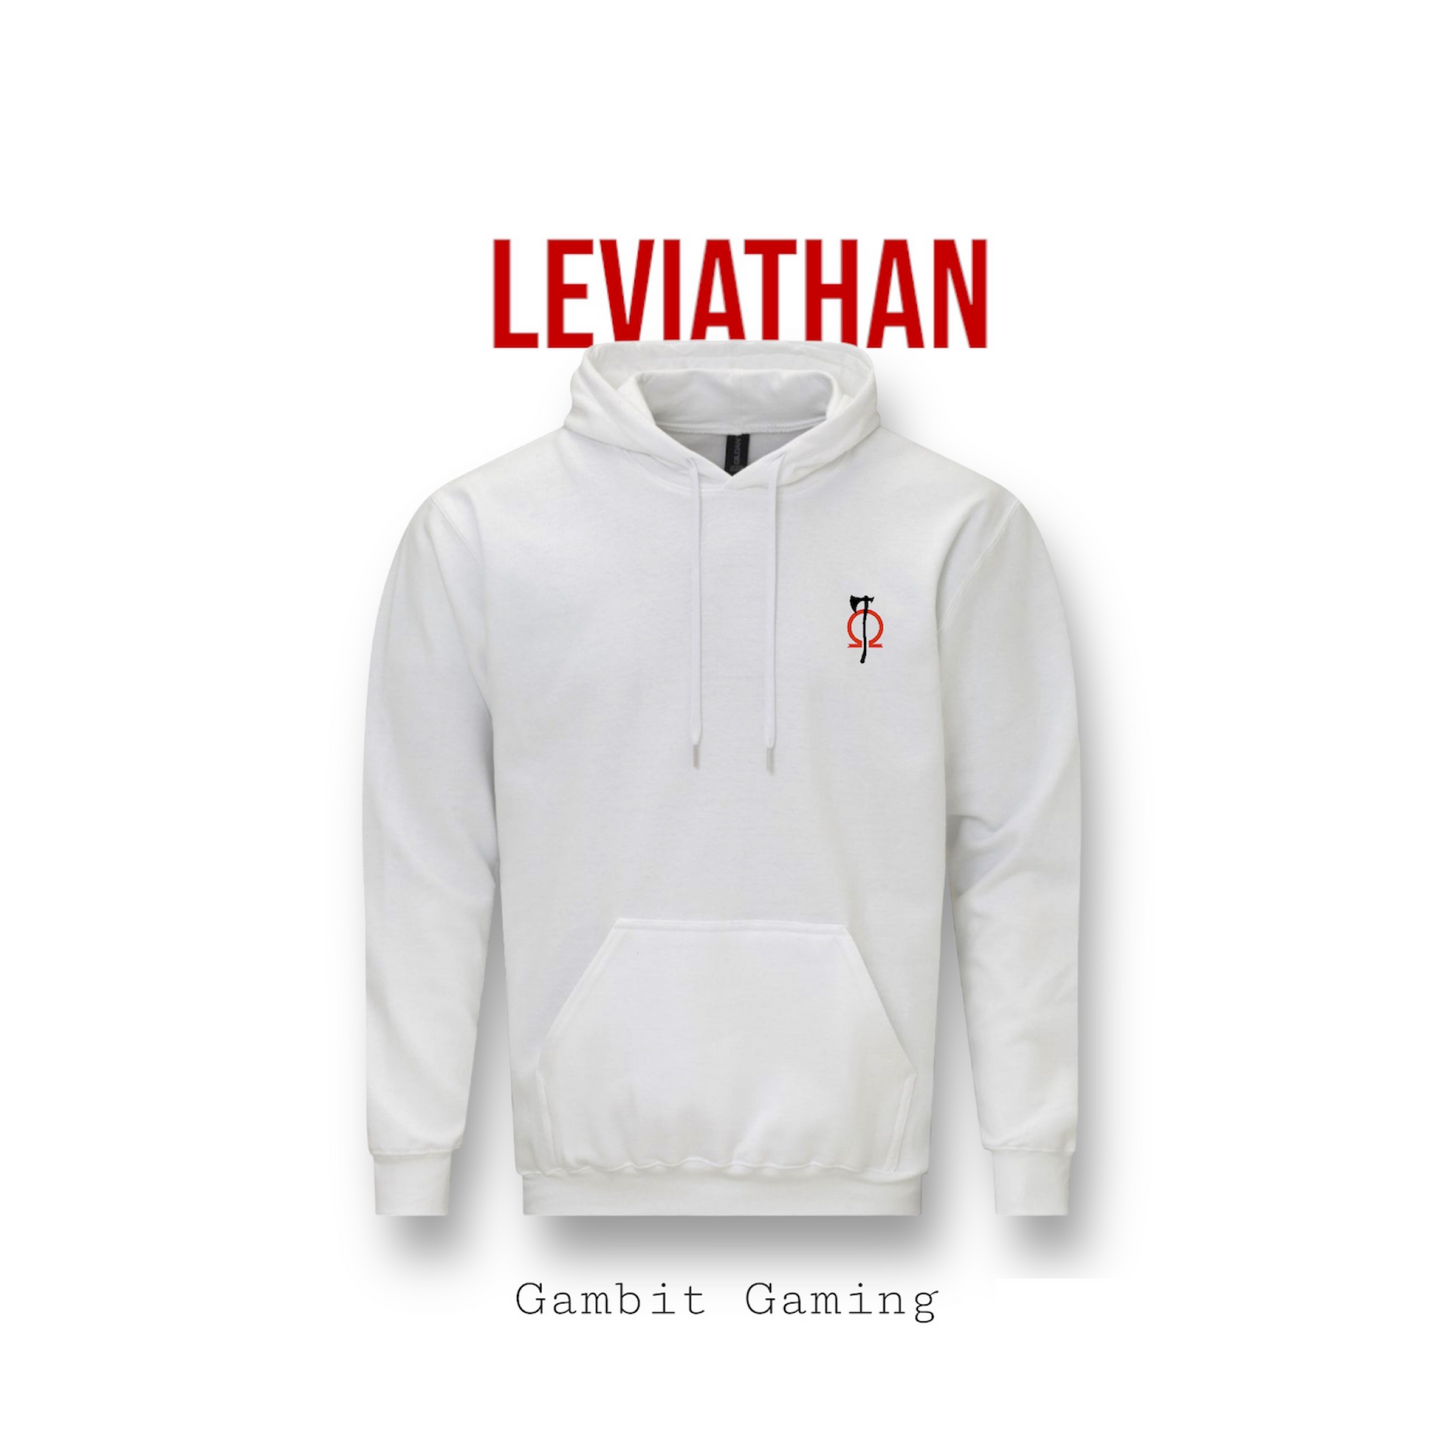 Leviathan Hoodie - Gambit Gaming